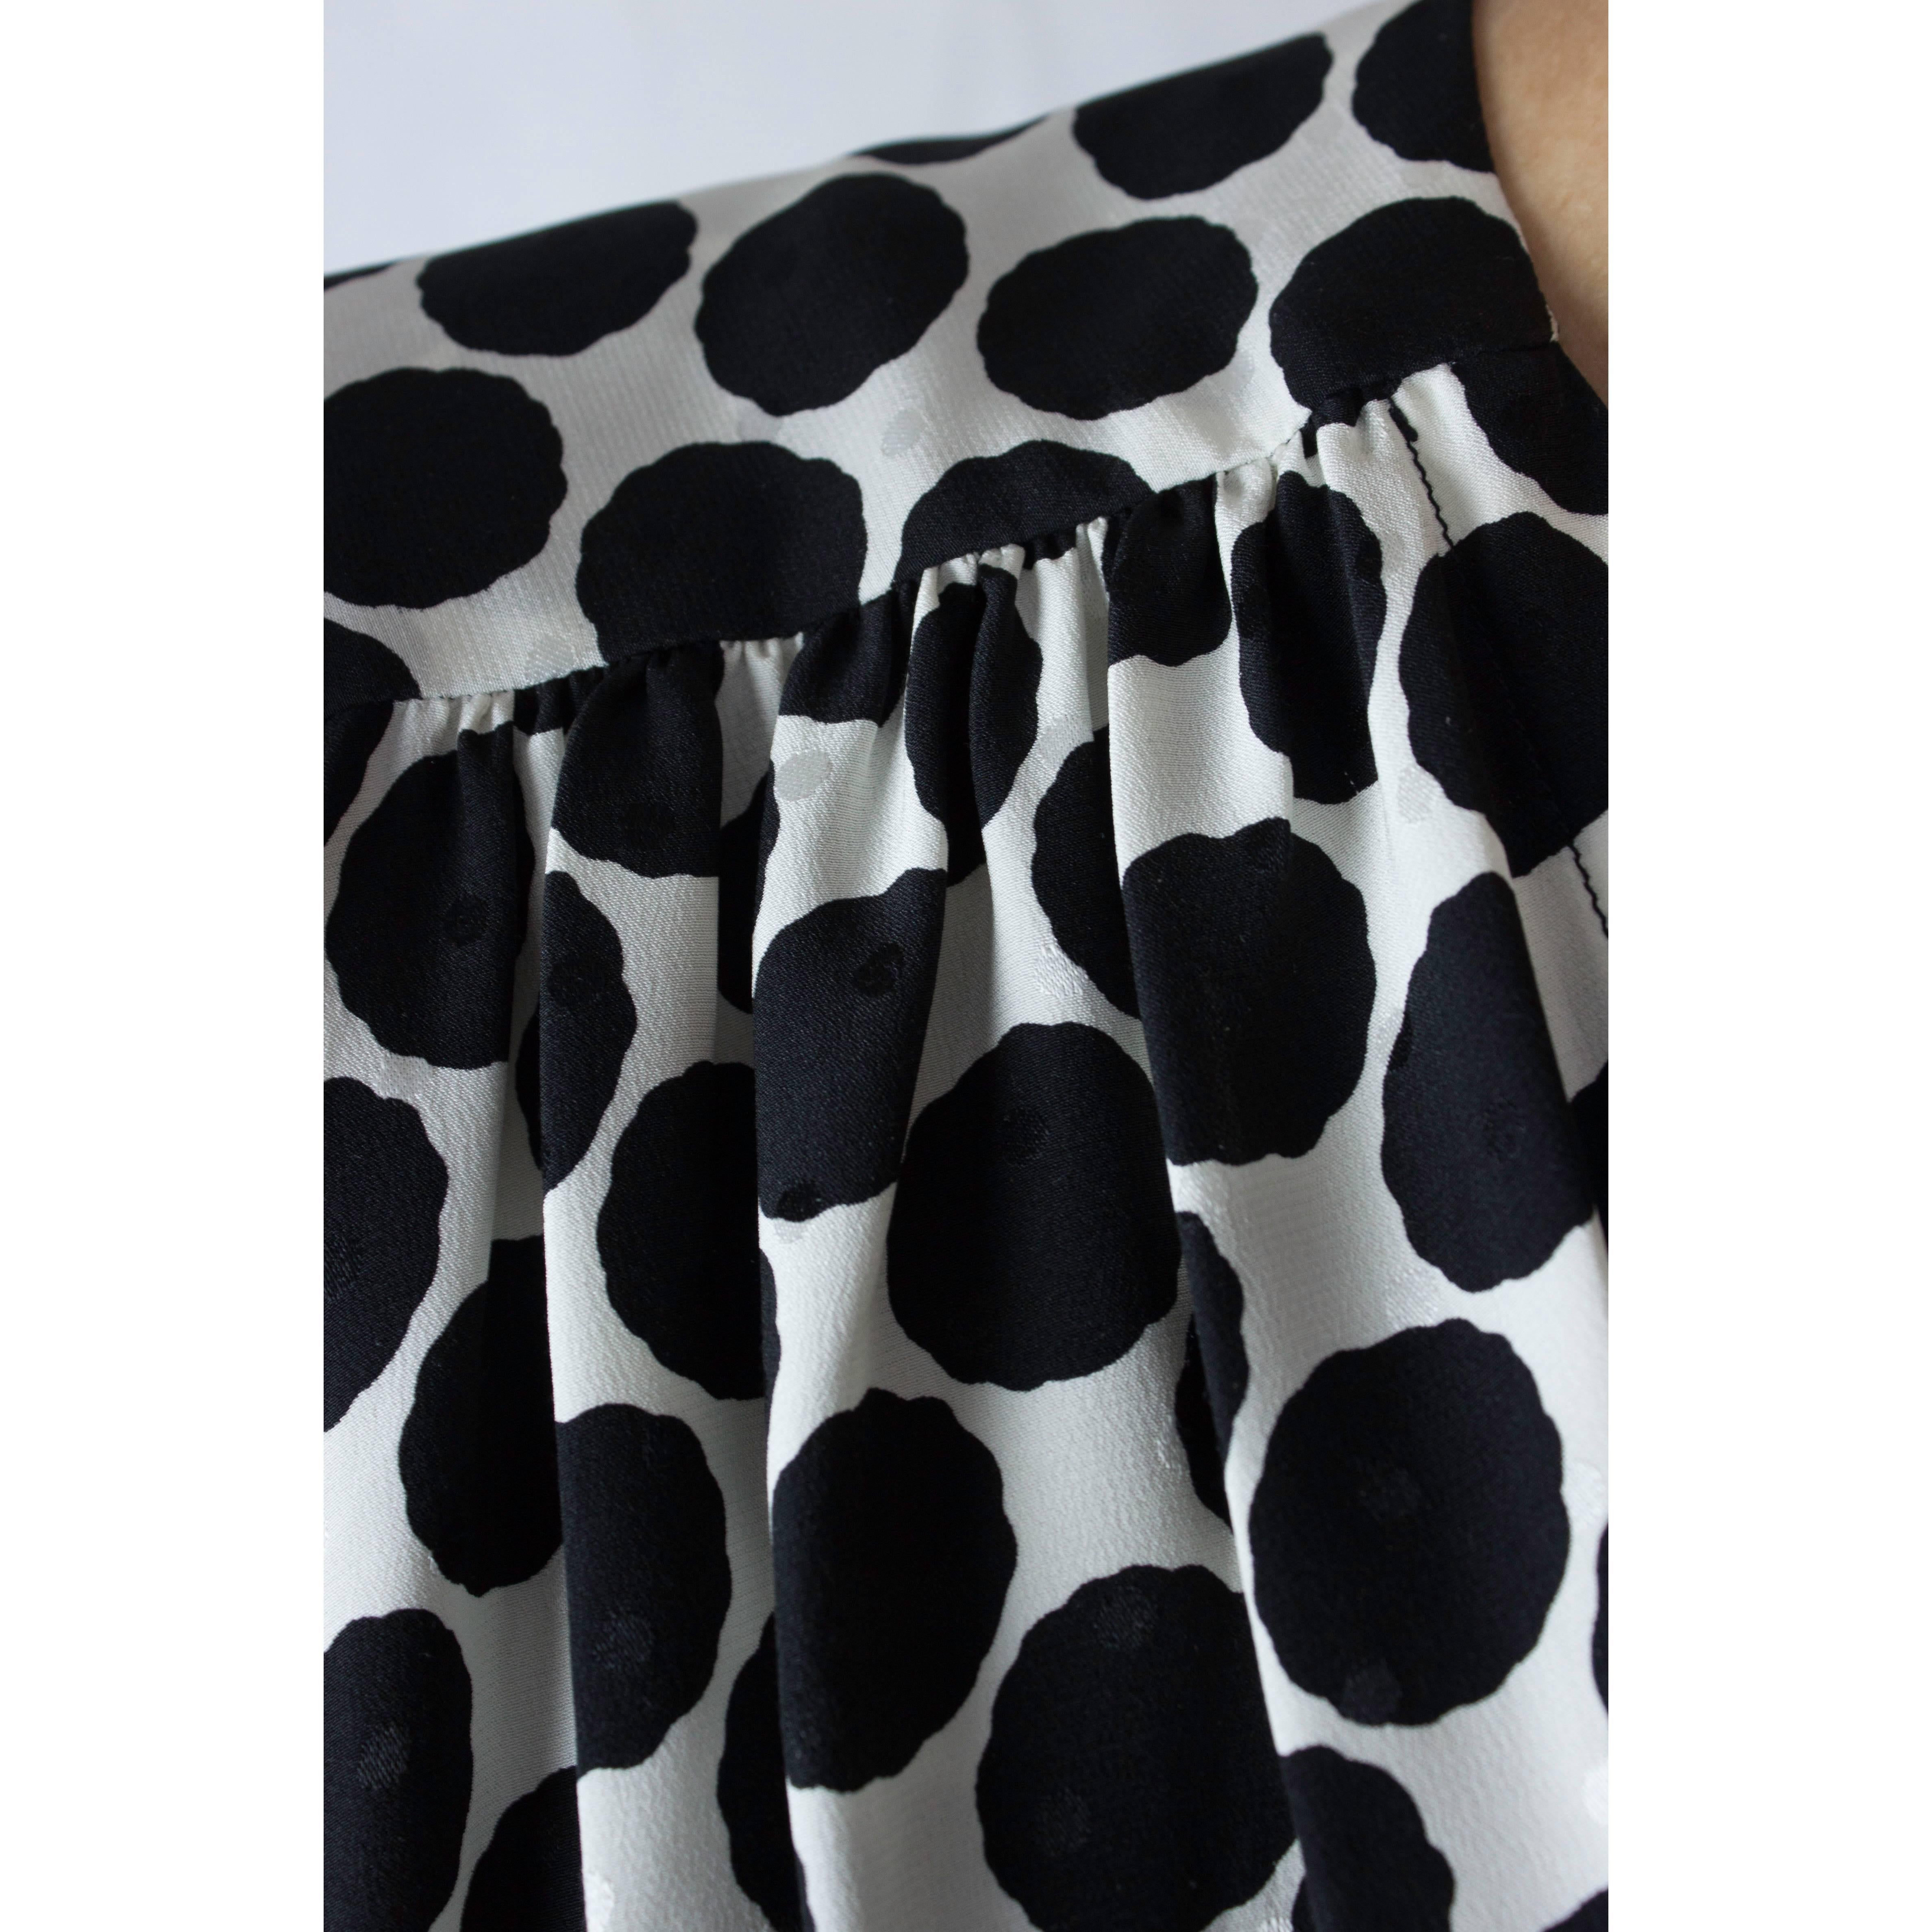 Saint Laurent opt art wraparound embossed silk dress with black dots, circa 1980 For Sale 1